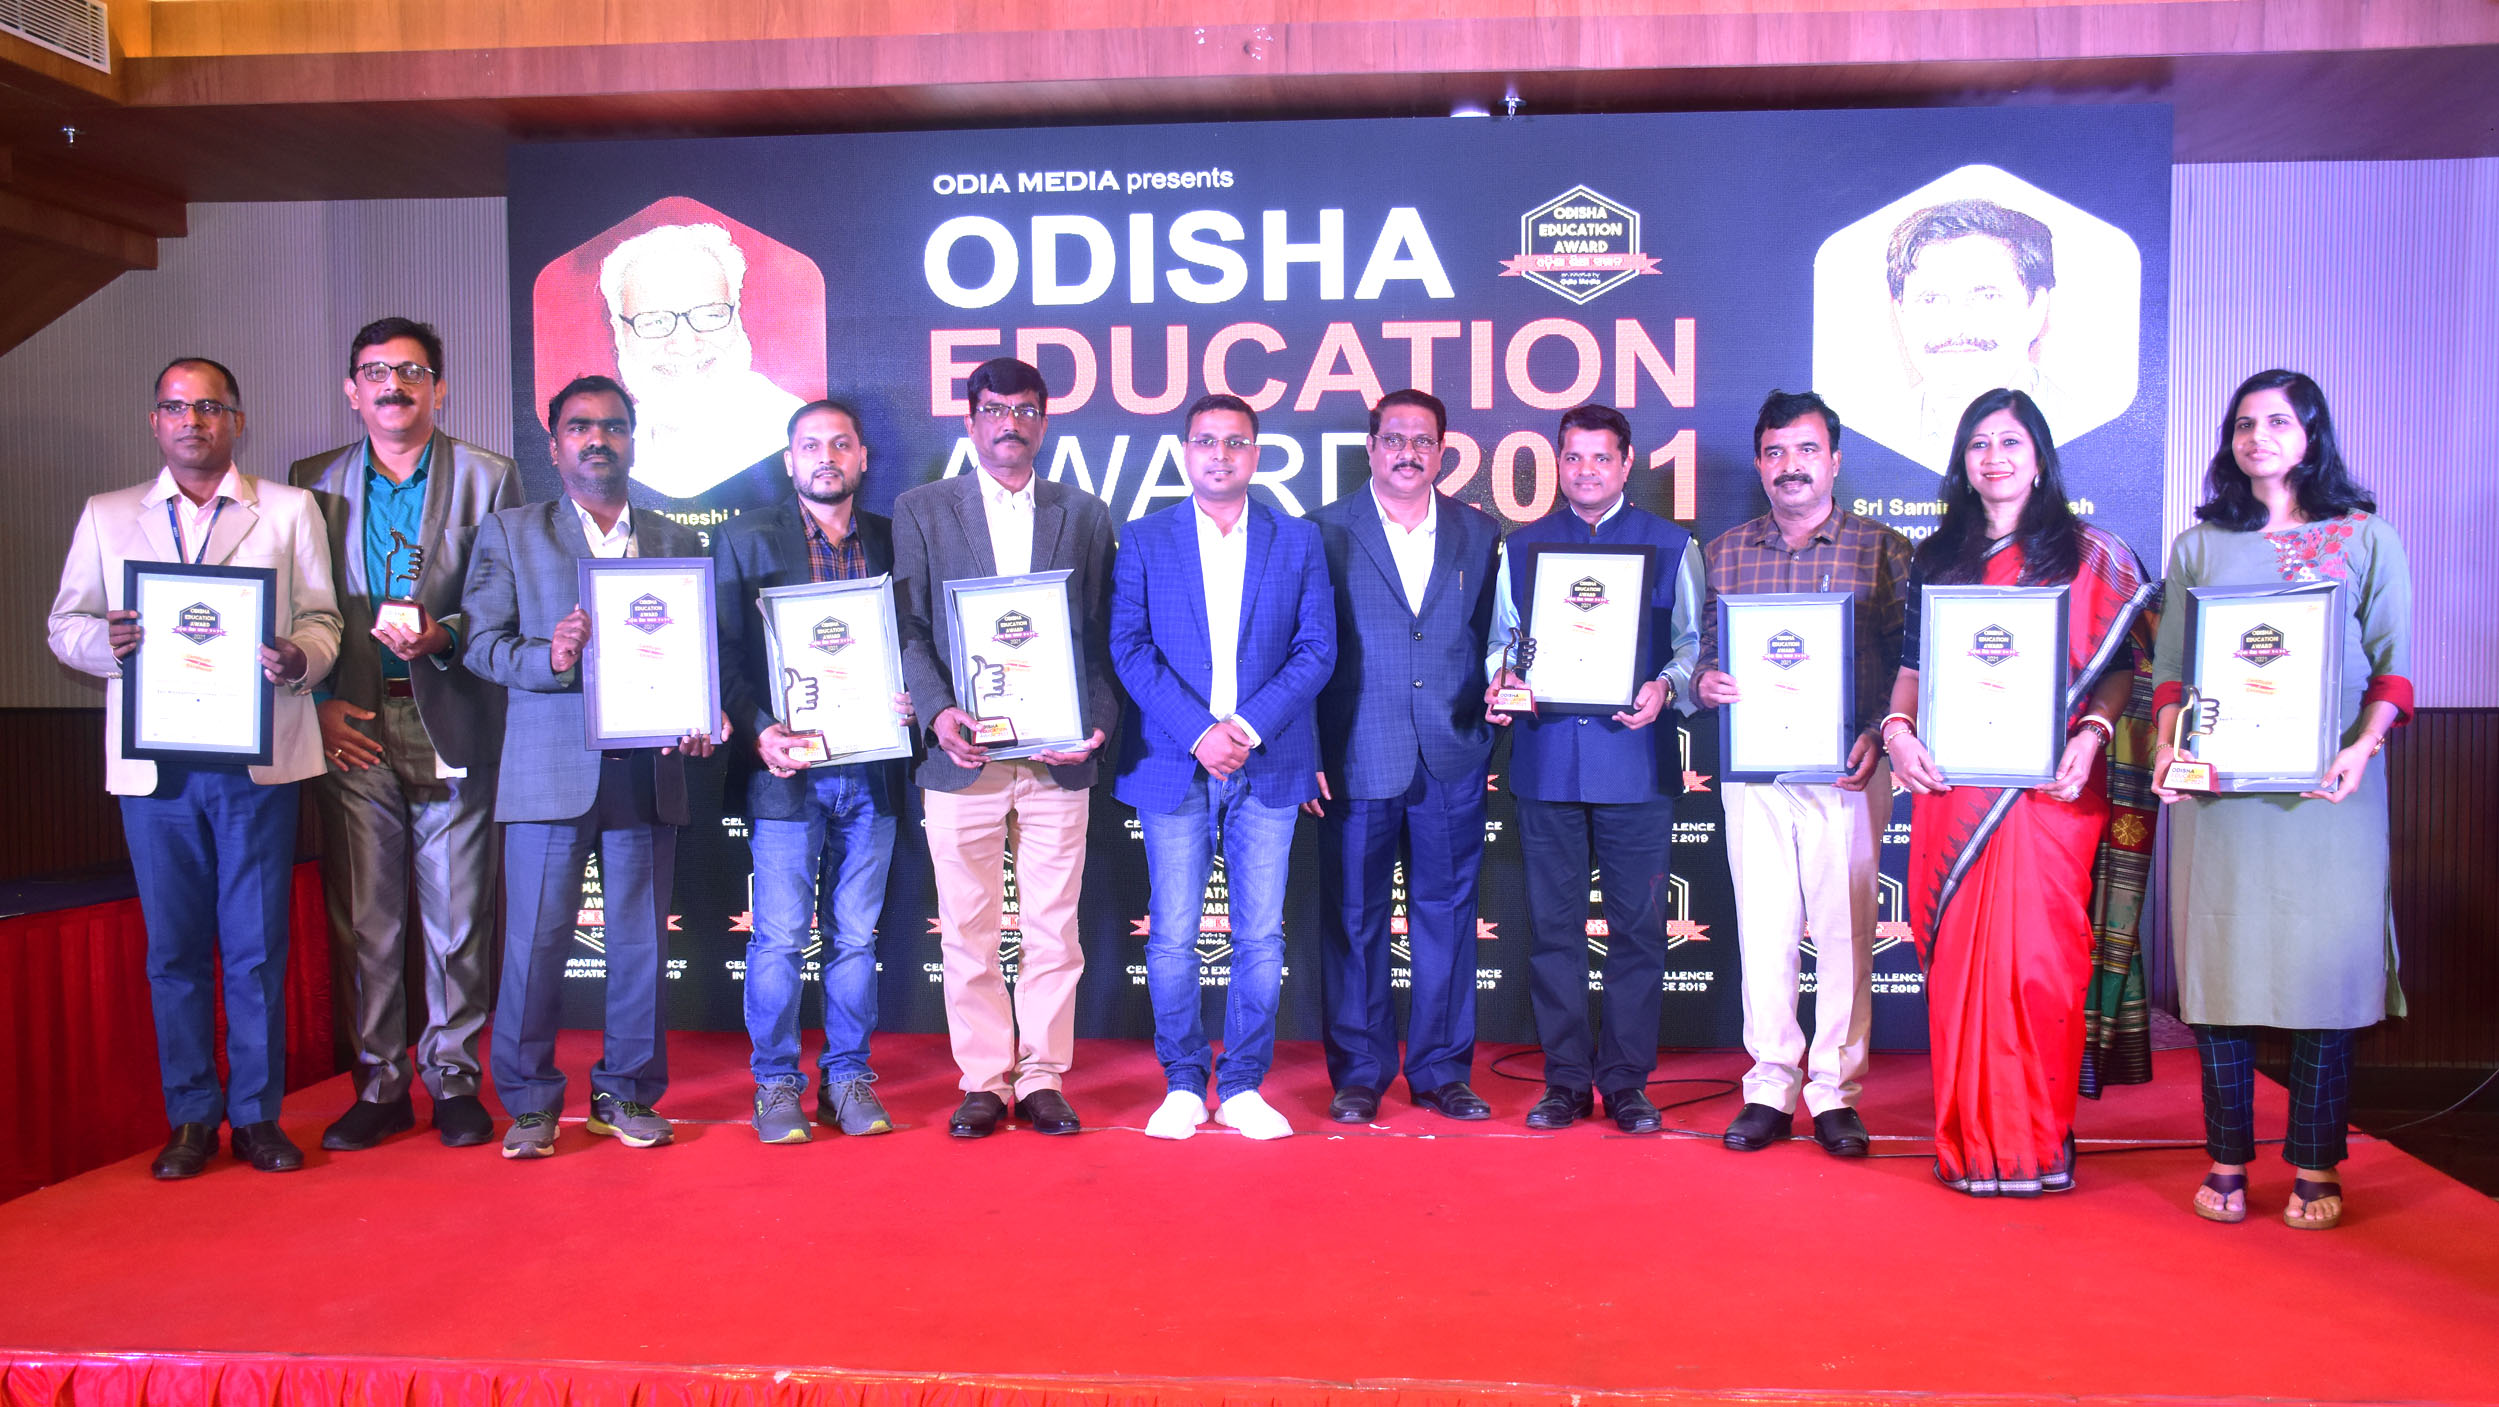 Odisha Education Award 2021 1